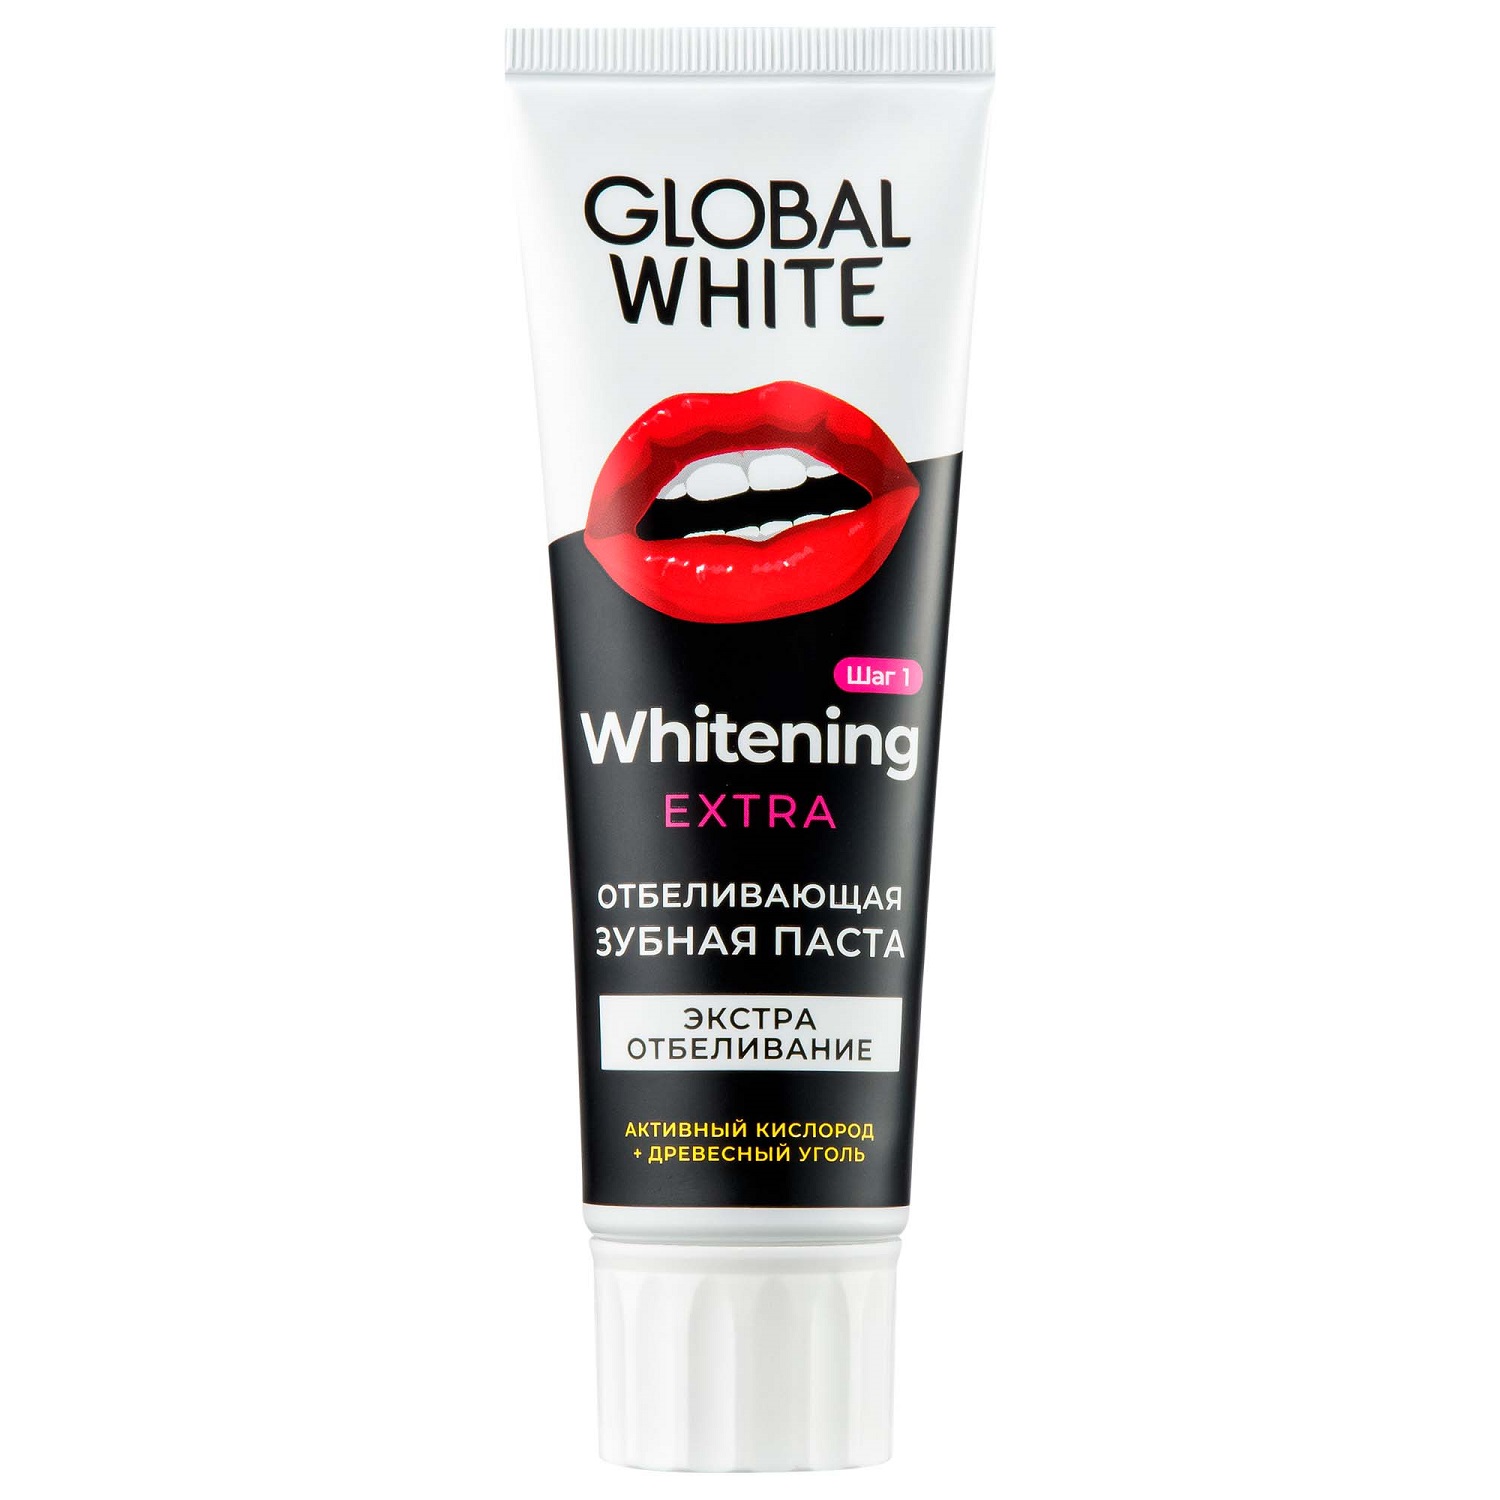 Global White Отбеливающая зубная паста Extra Whitening, 100 г (Global White, Подготовка к отбеливанию) черная зубная паста с активированным углем и бамбуковым углем для ухода за дыханием отбеливающий инструмент желтый m1x5